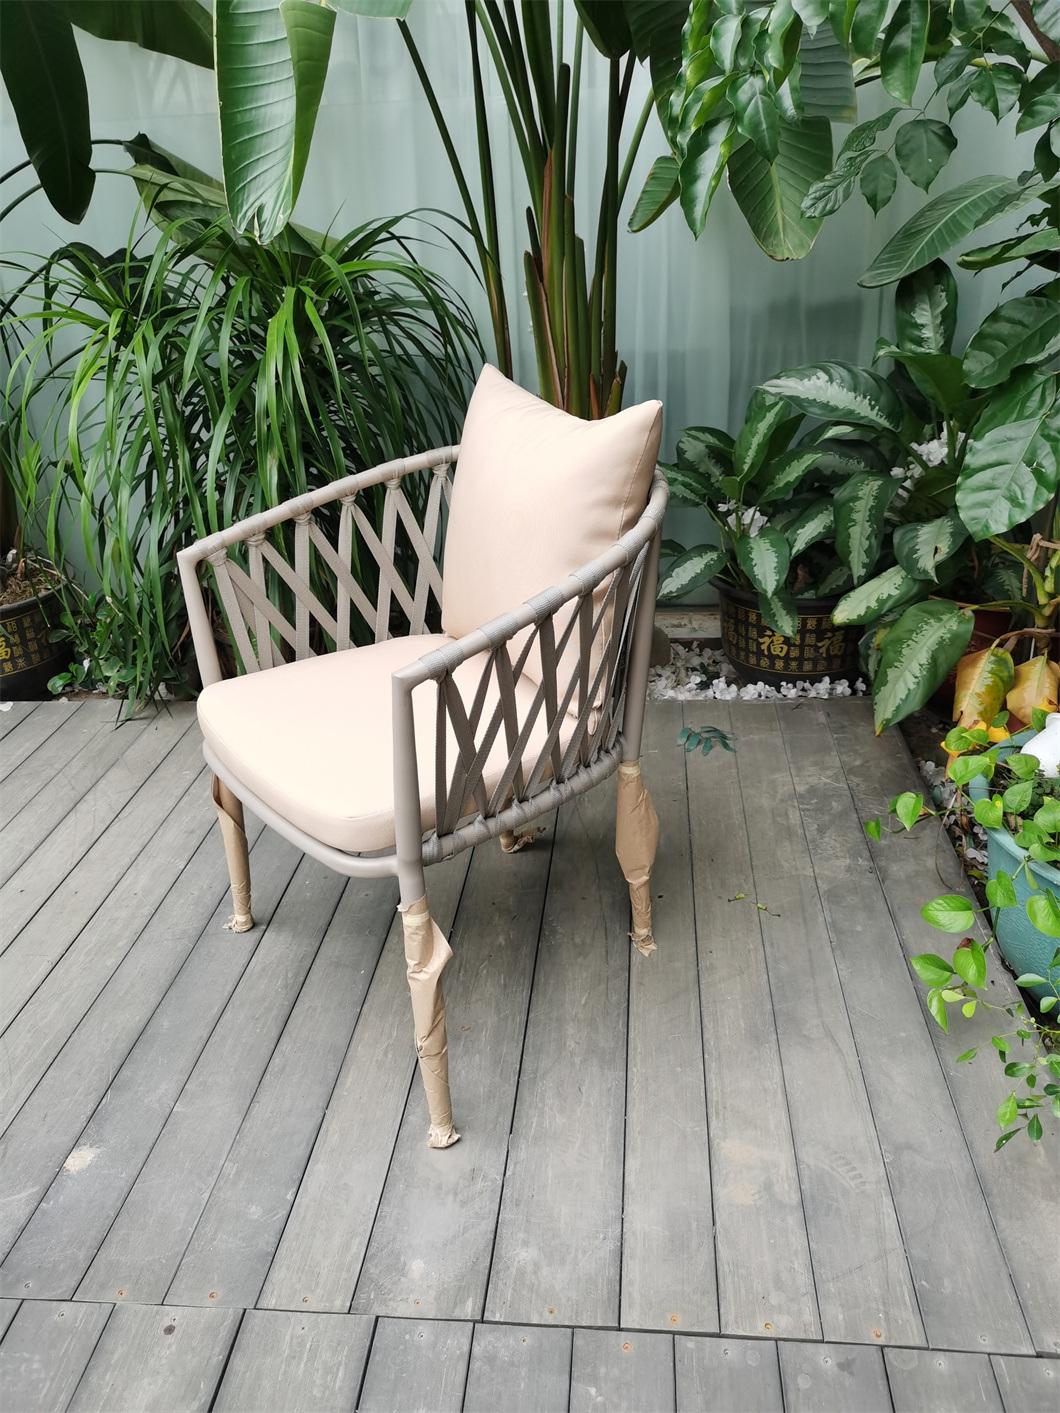 Modern Style Rattan Outdoor Patio Garden Outdoor Rattan Aluminum Furniture Chair